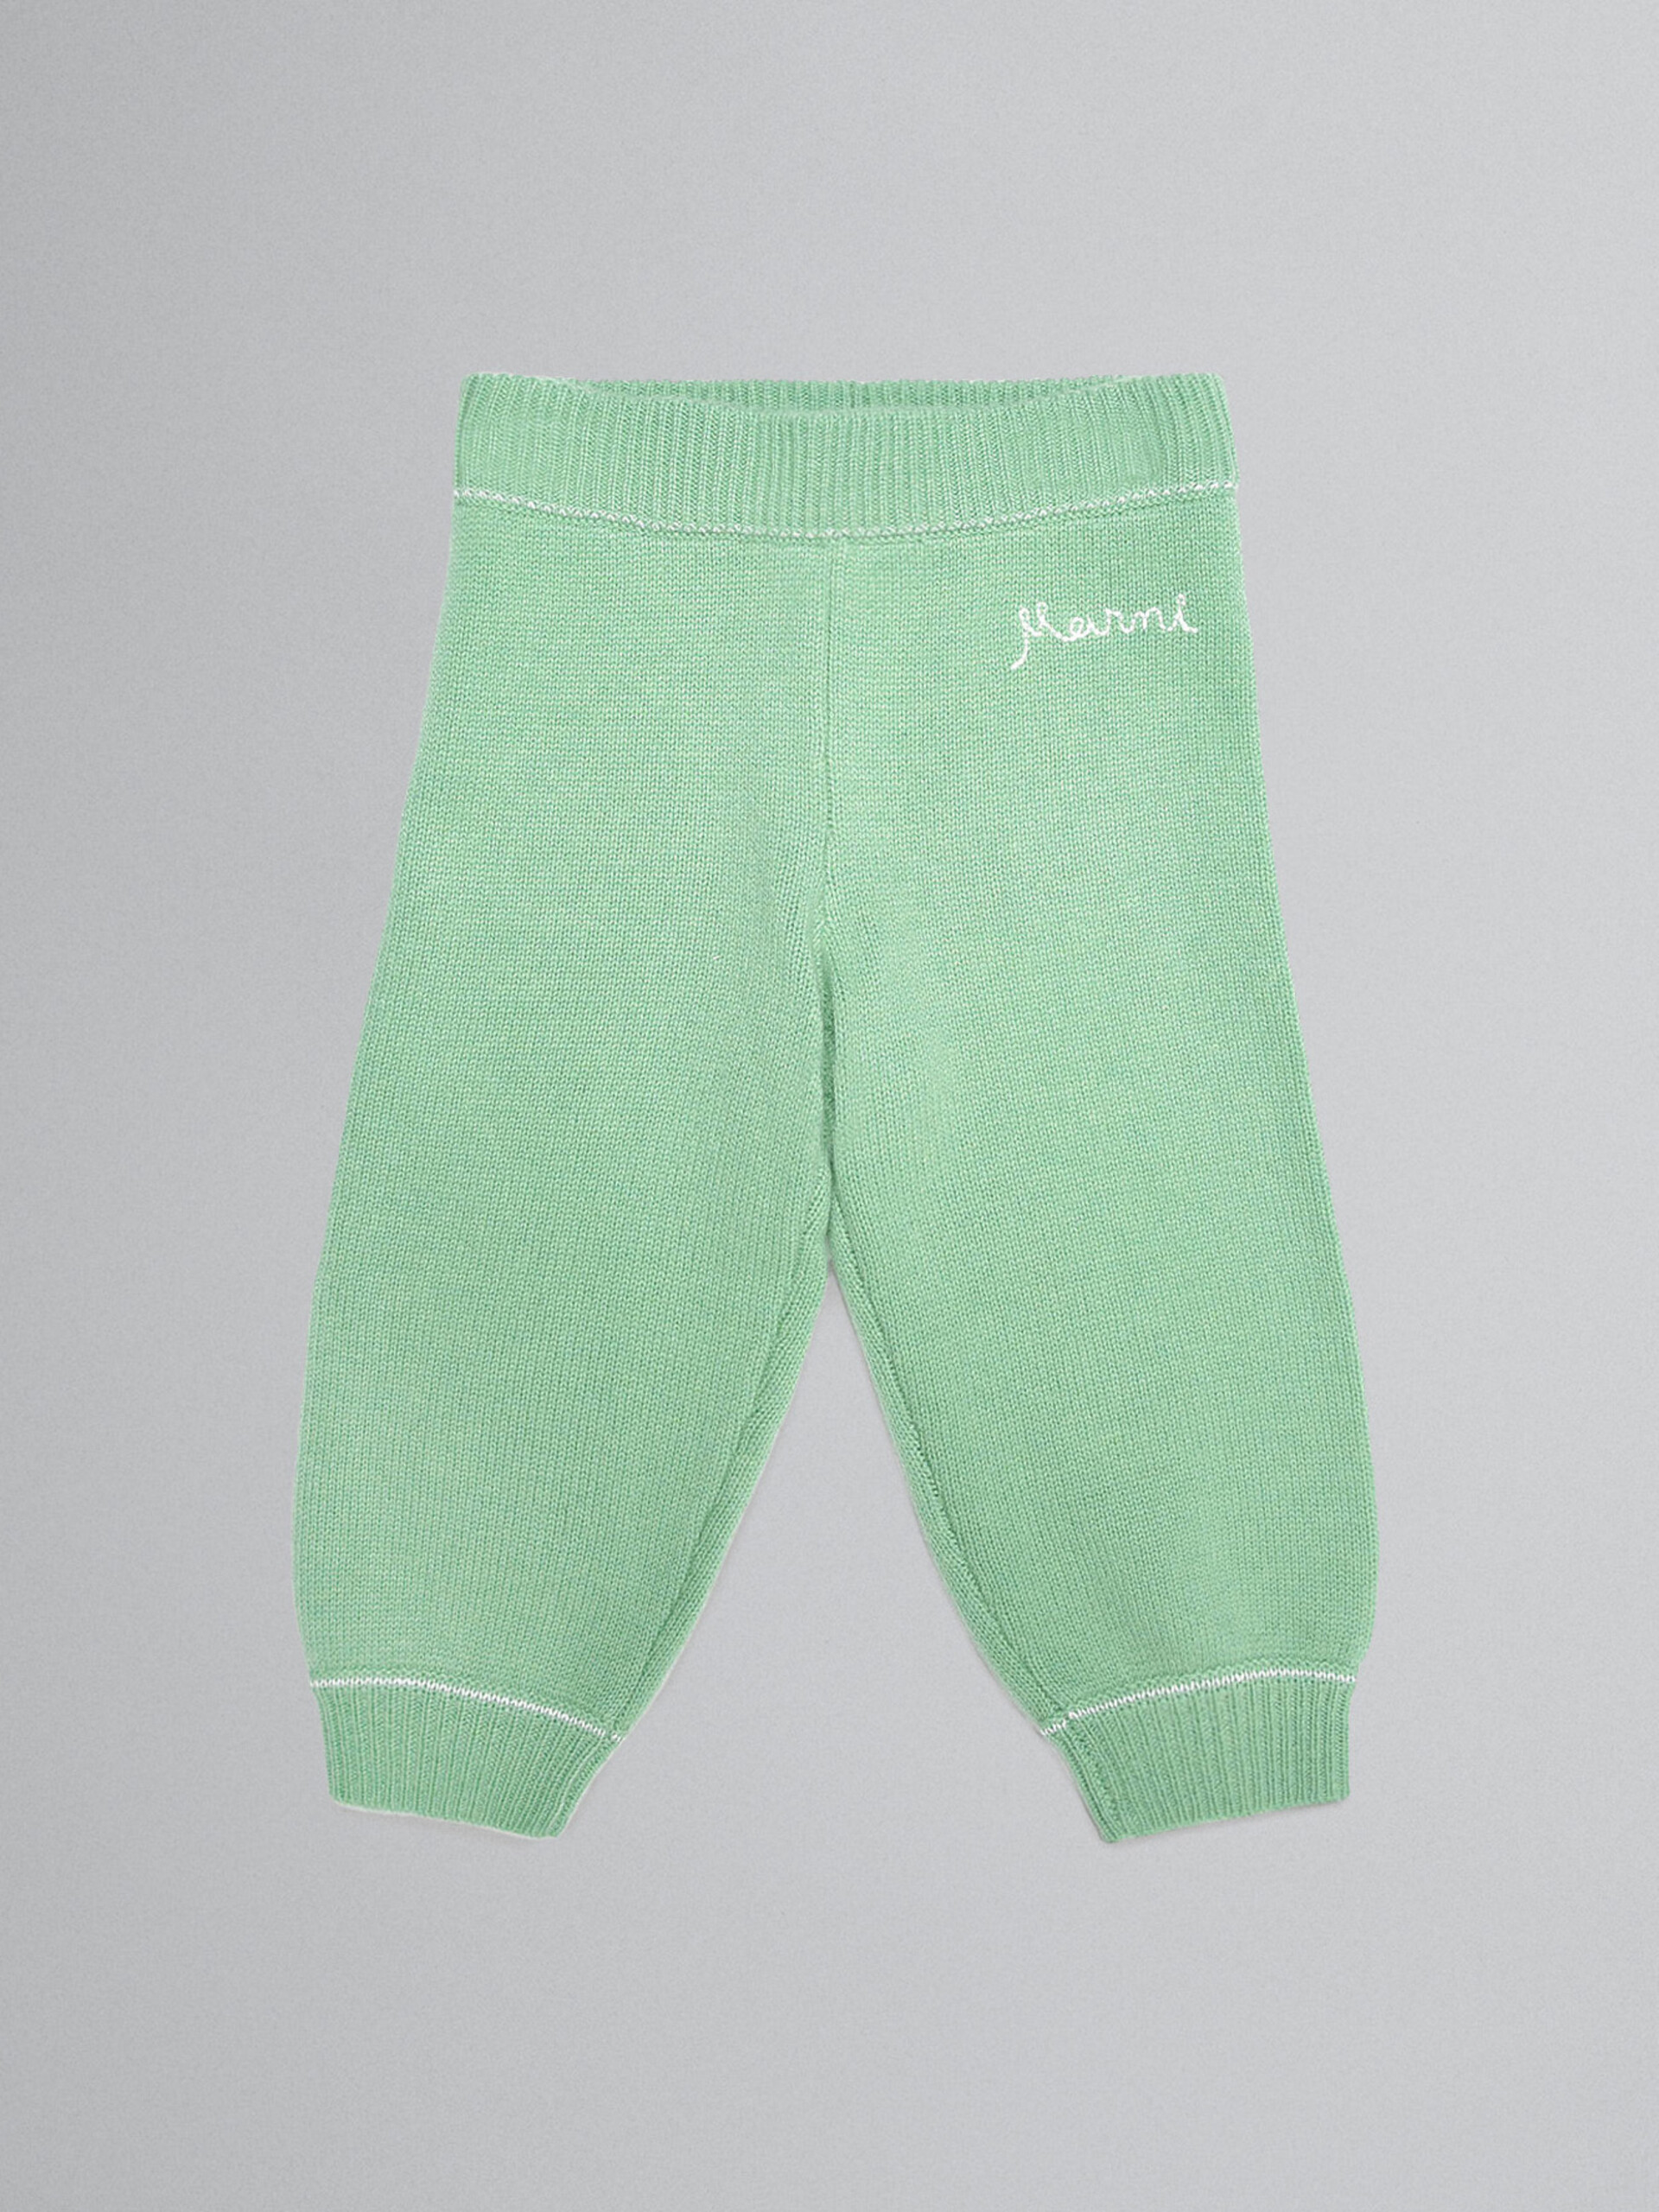 Green cashmere blend pants - Pants - Image 1